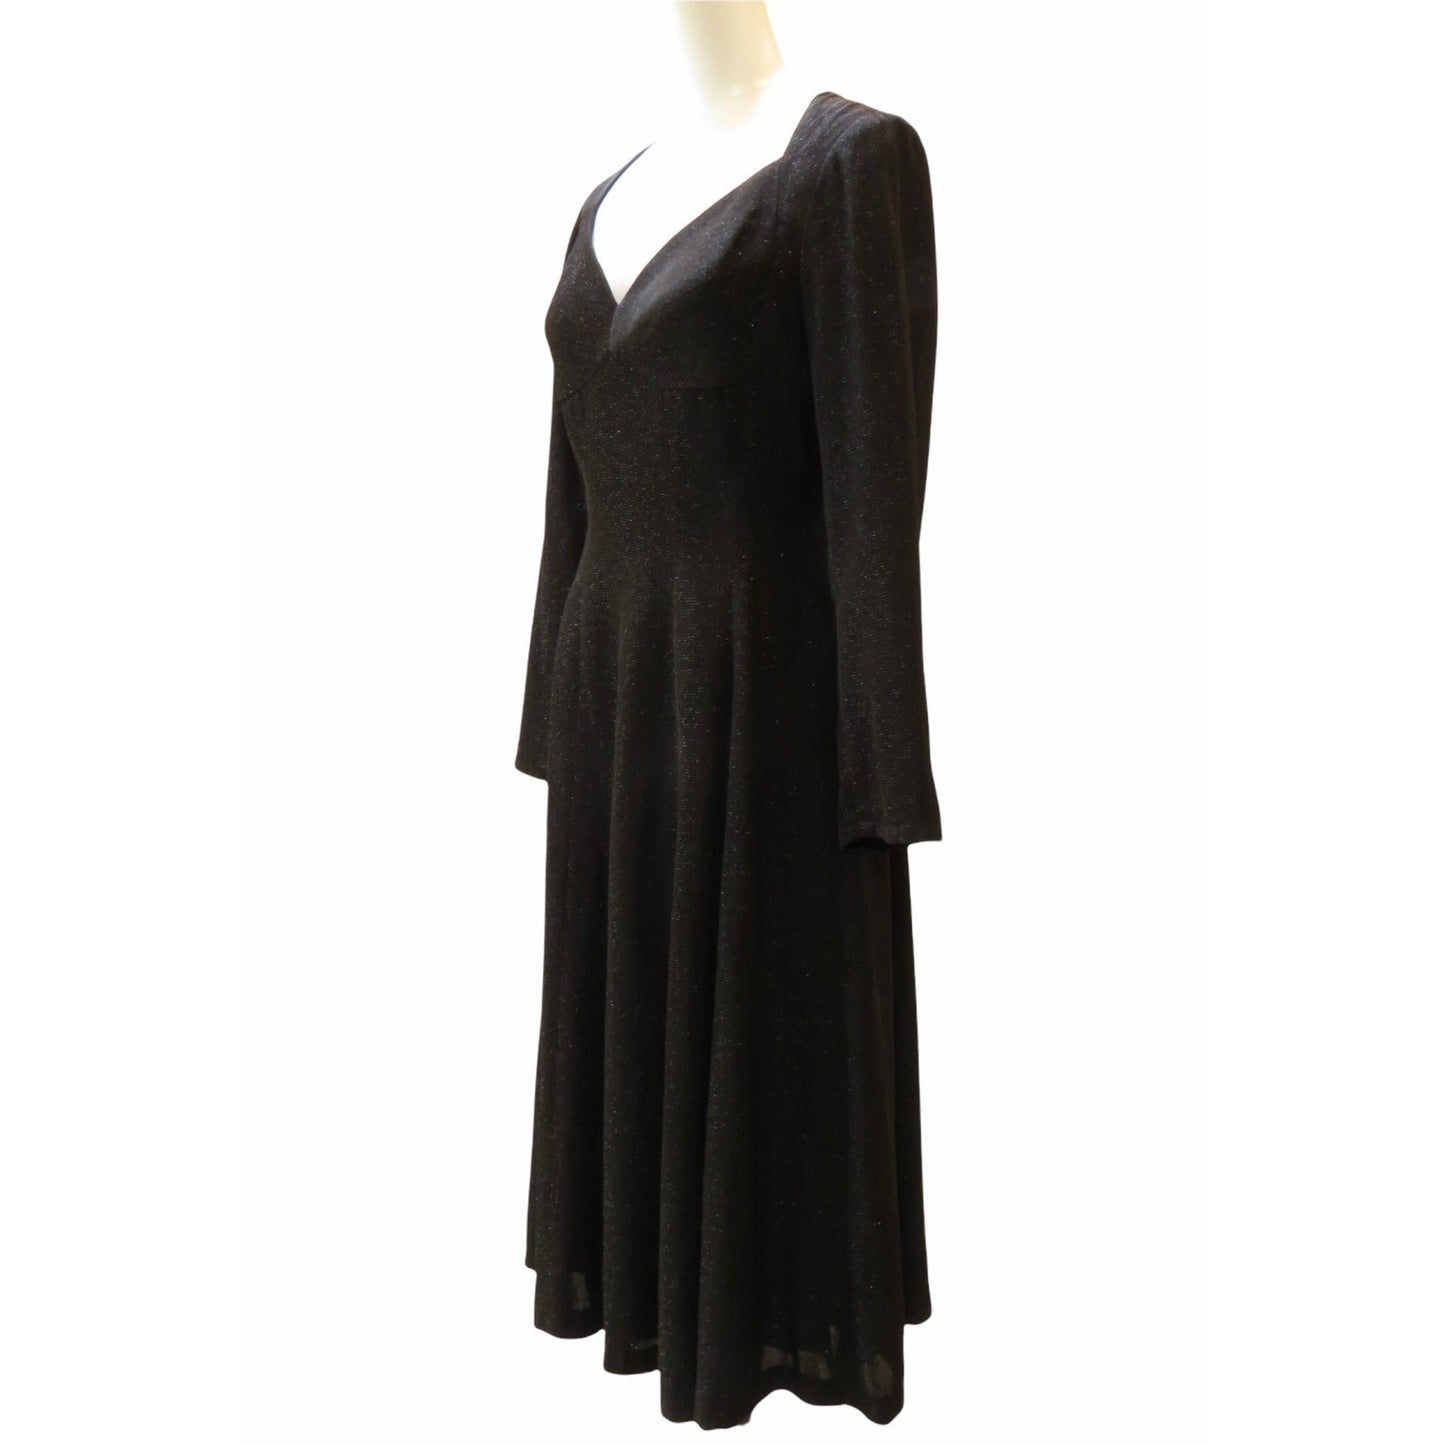 Dresses nicole-shimmering-black-dress Black